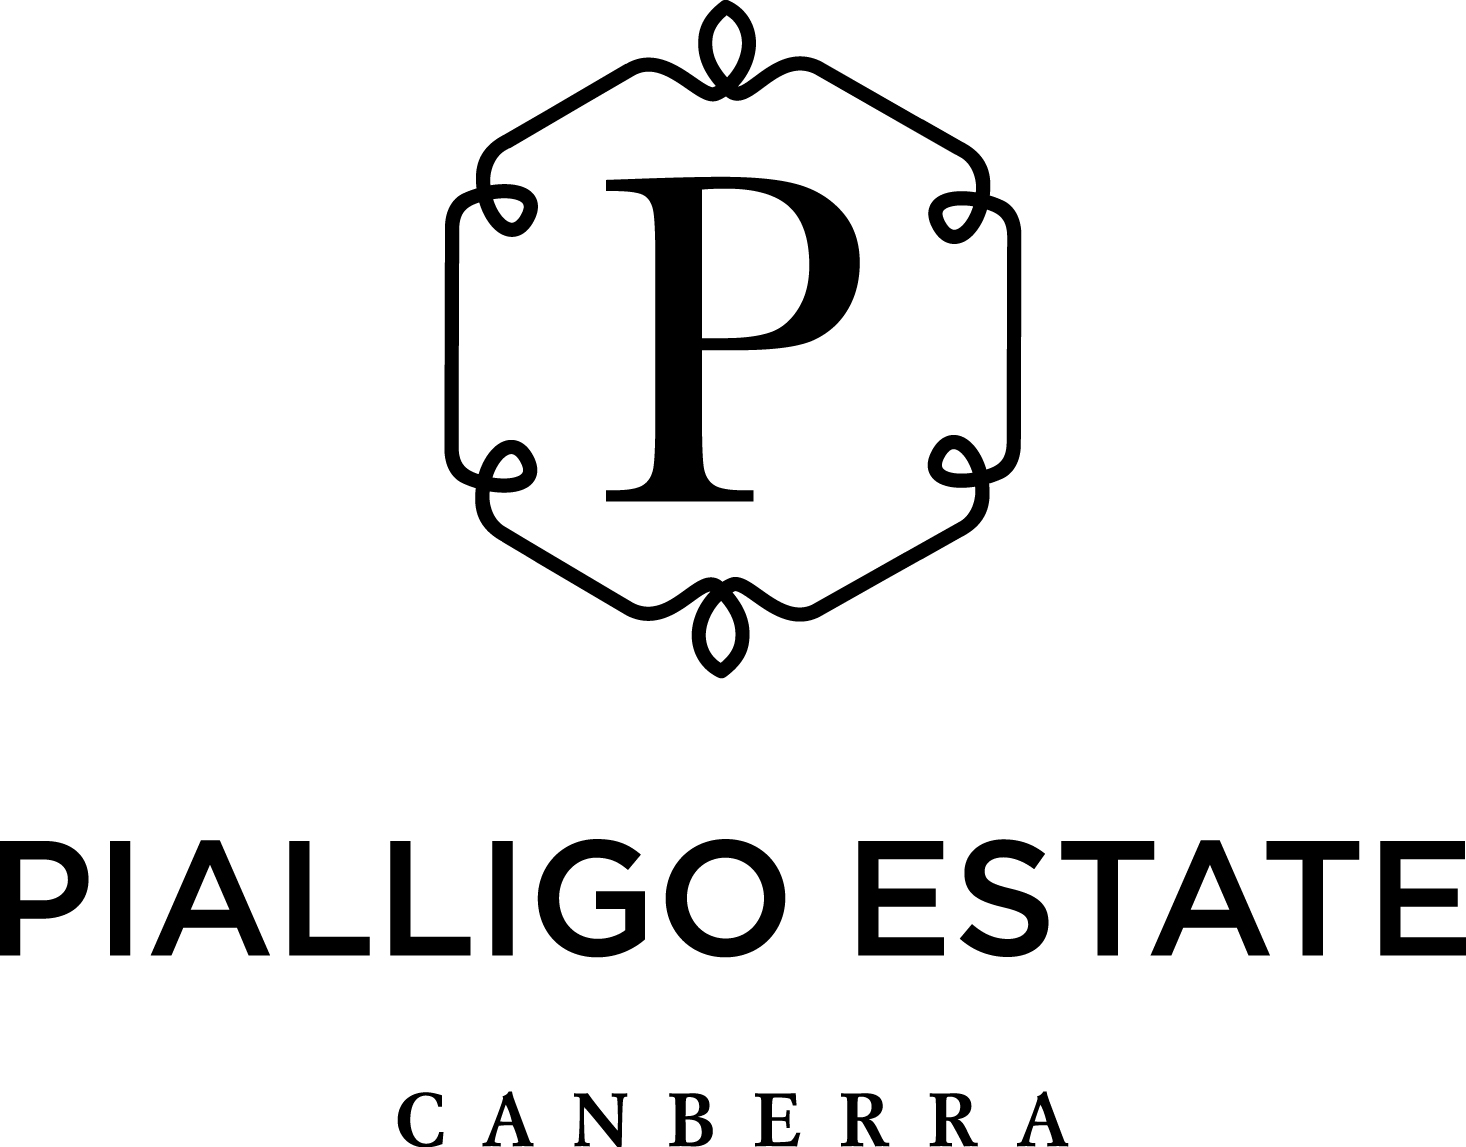 Pialligo Estate